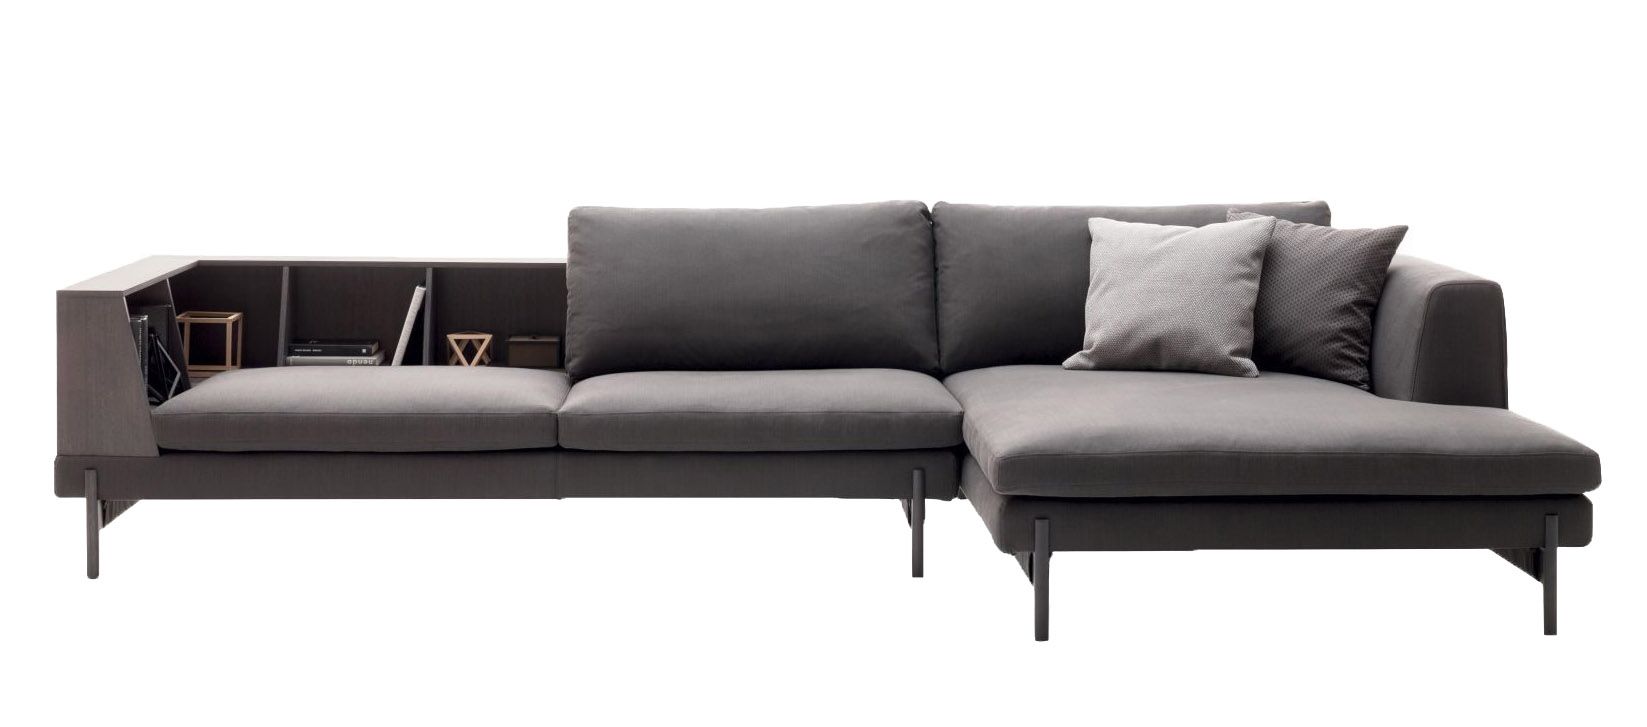 Sofa Kim by Ditre Italia